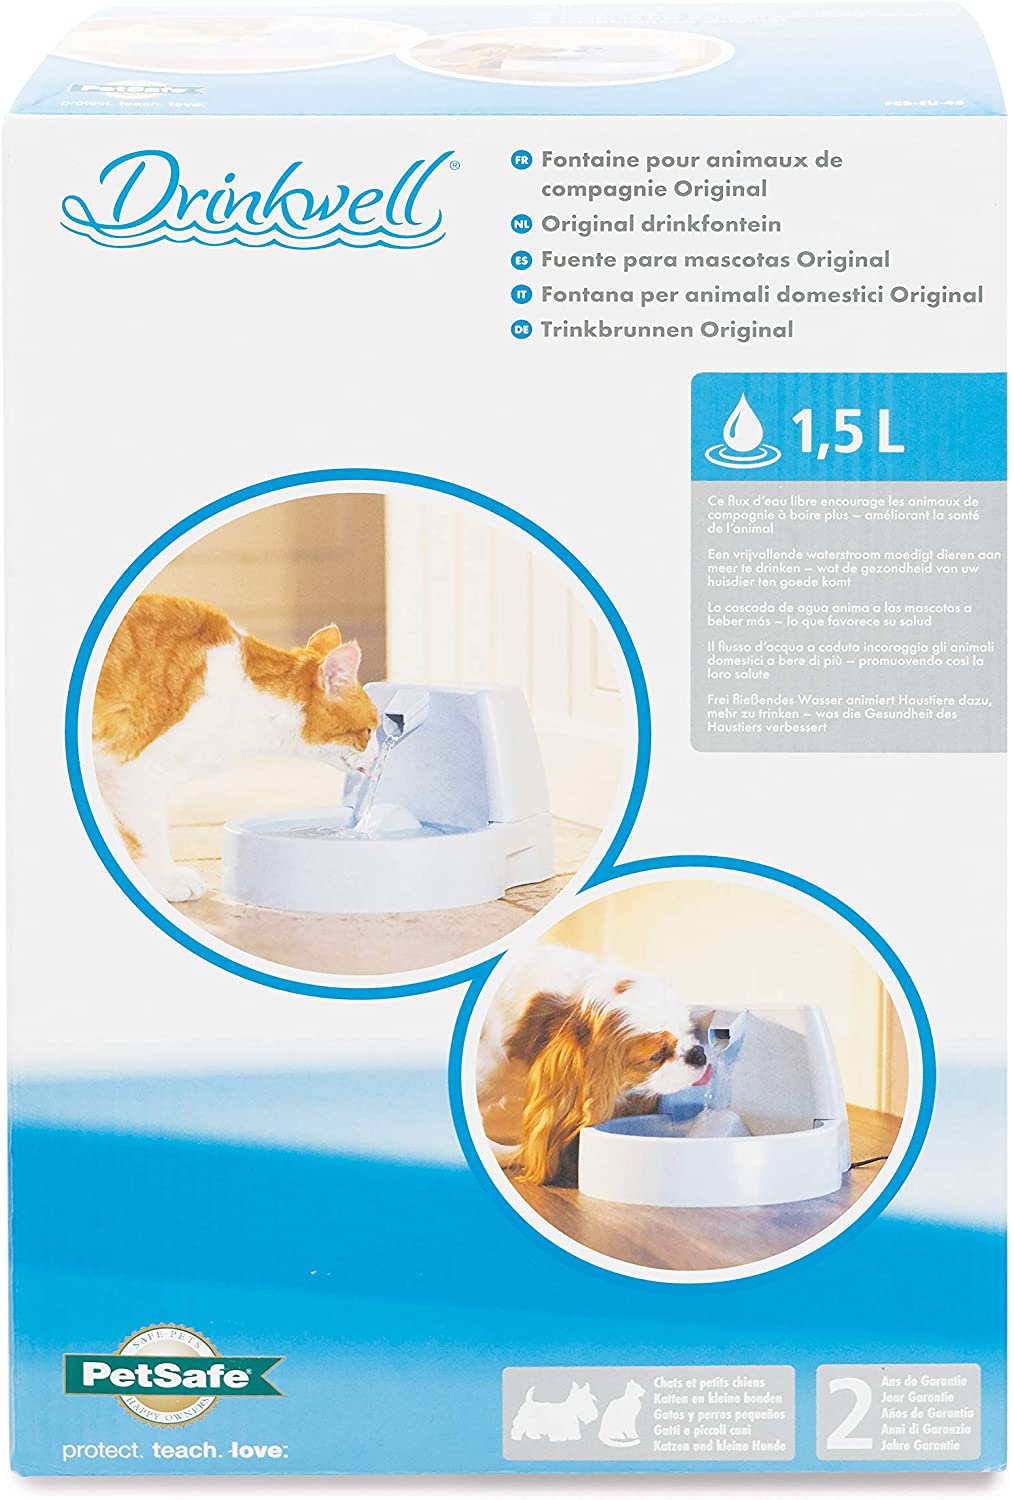  PetSafe Drinkwell - Fuente para Mascotas 